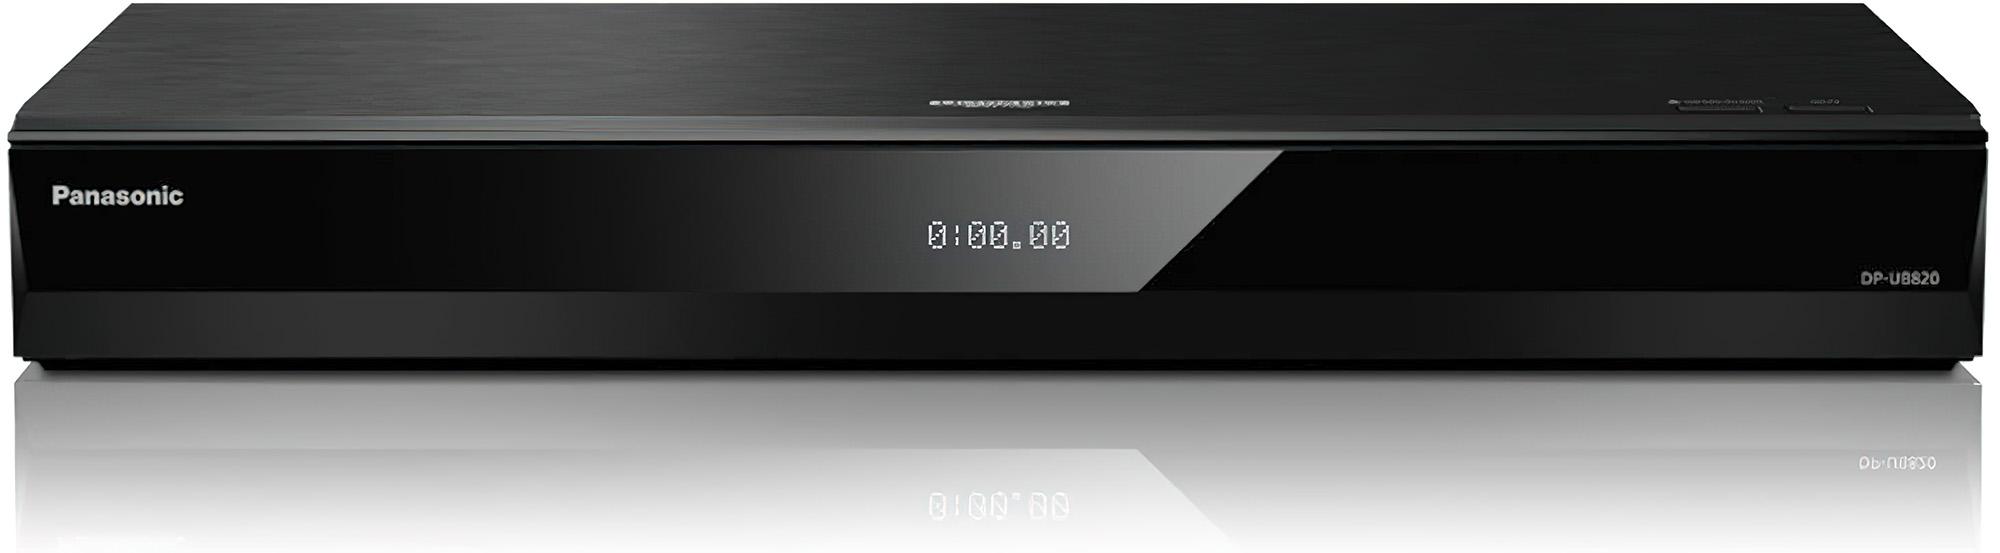 A dedicated Ultra HD Blu-ray player is an easy way to enjoy top-quality home entertainment 56b96cc8 panasonic uhd blu ray